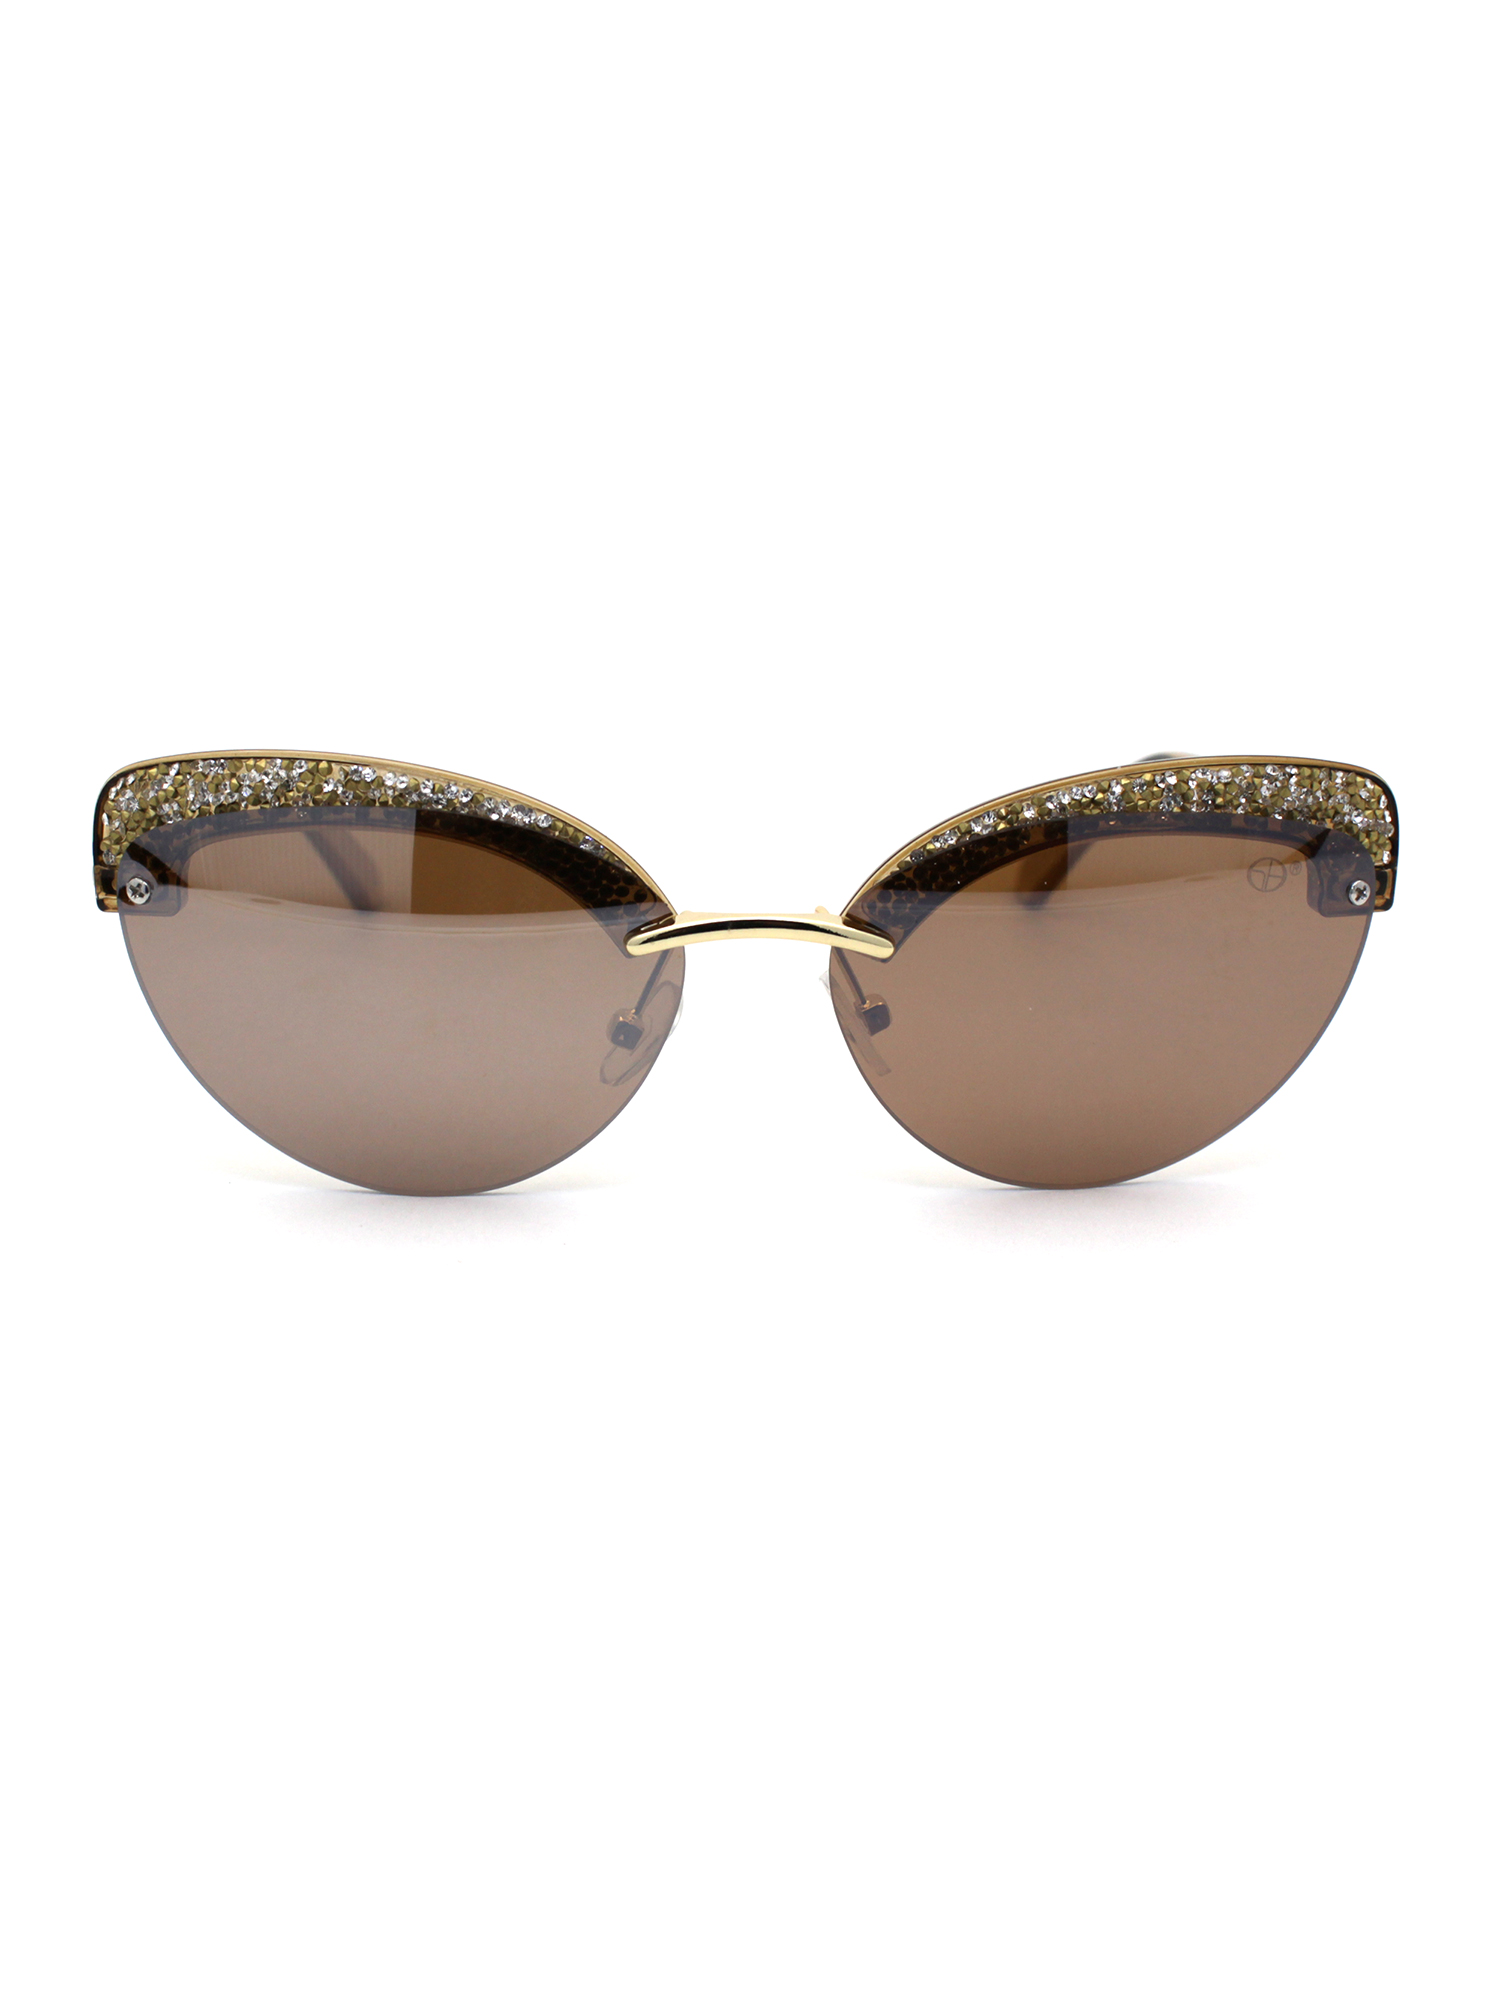 Womens Glitter Nugget Stud Half Rim Round Cat Eye Sunglasses Gold Beige Brown - image 1 of 4